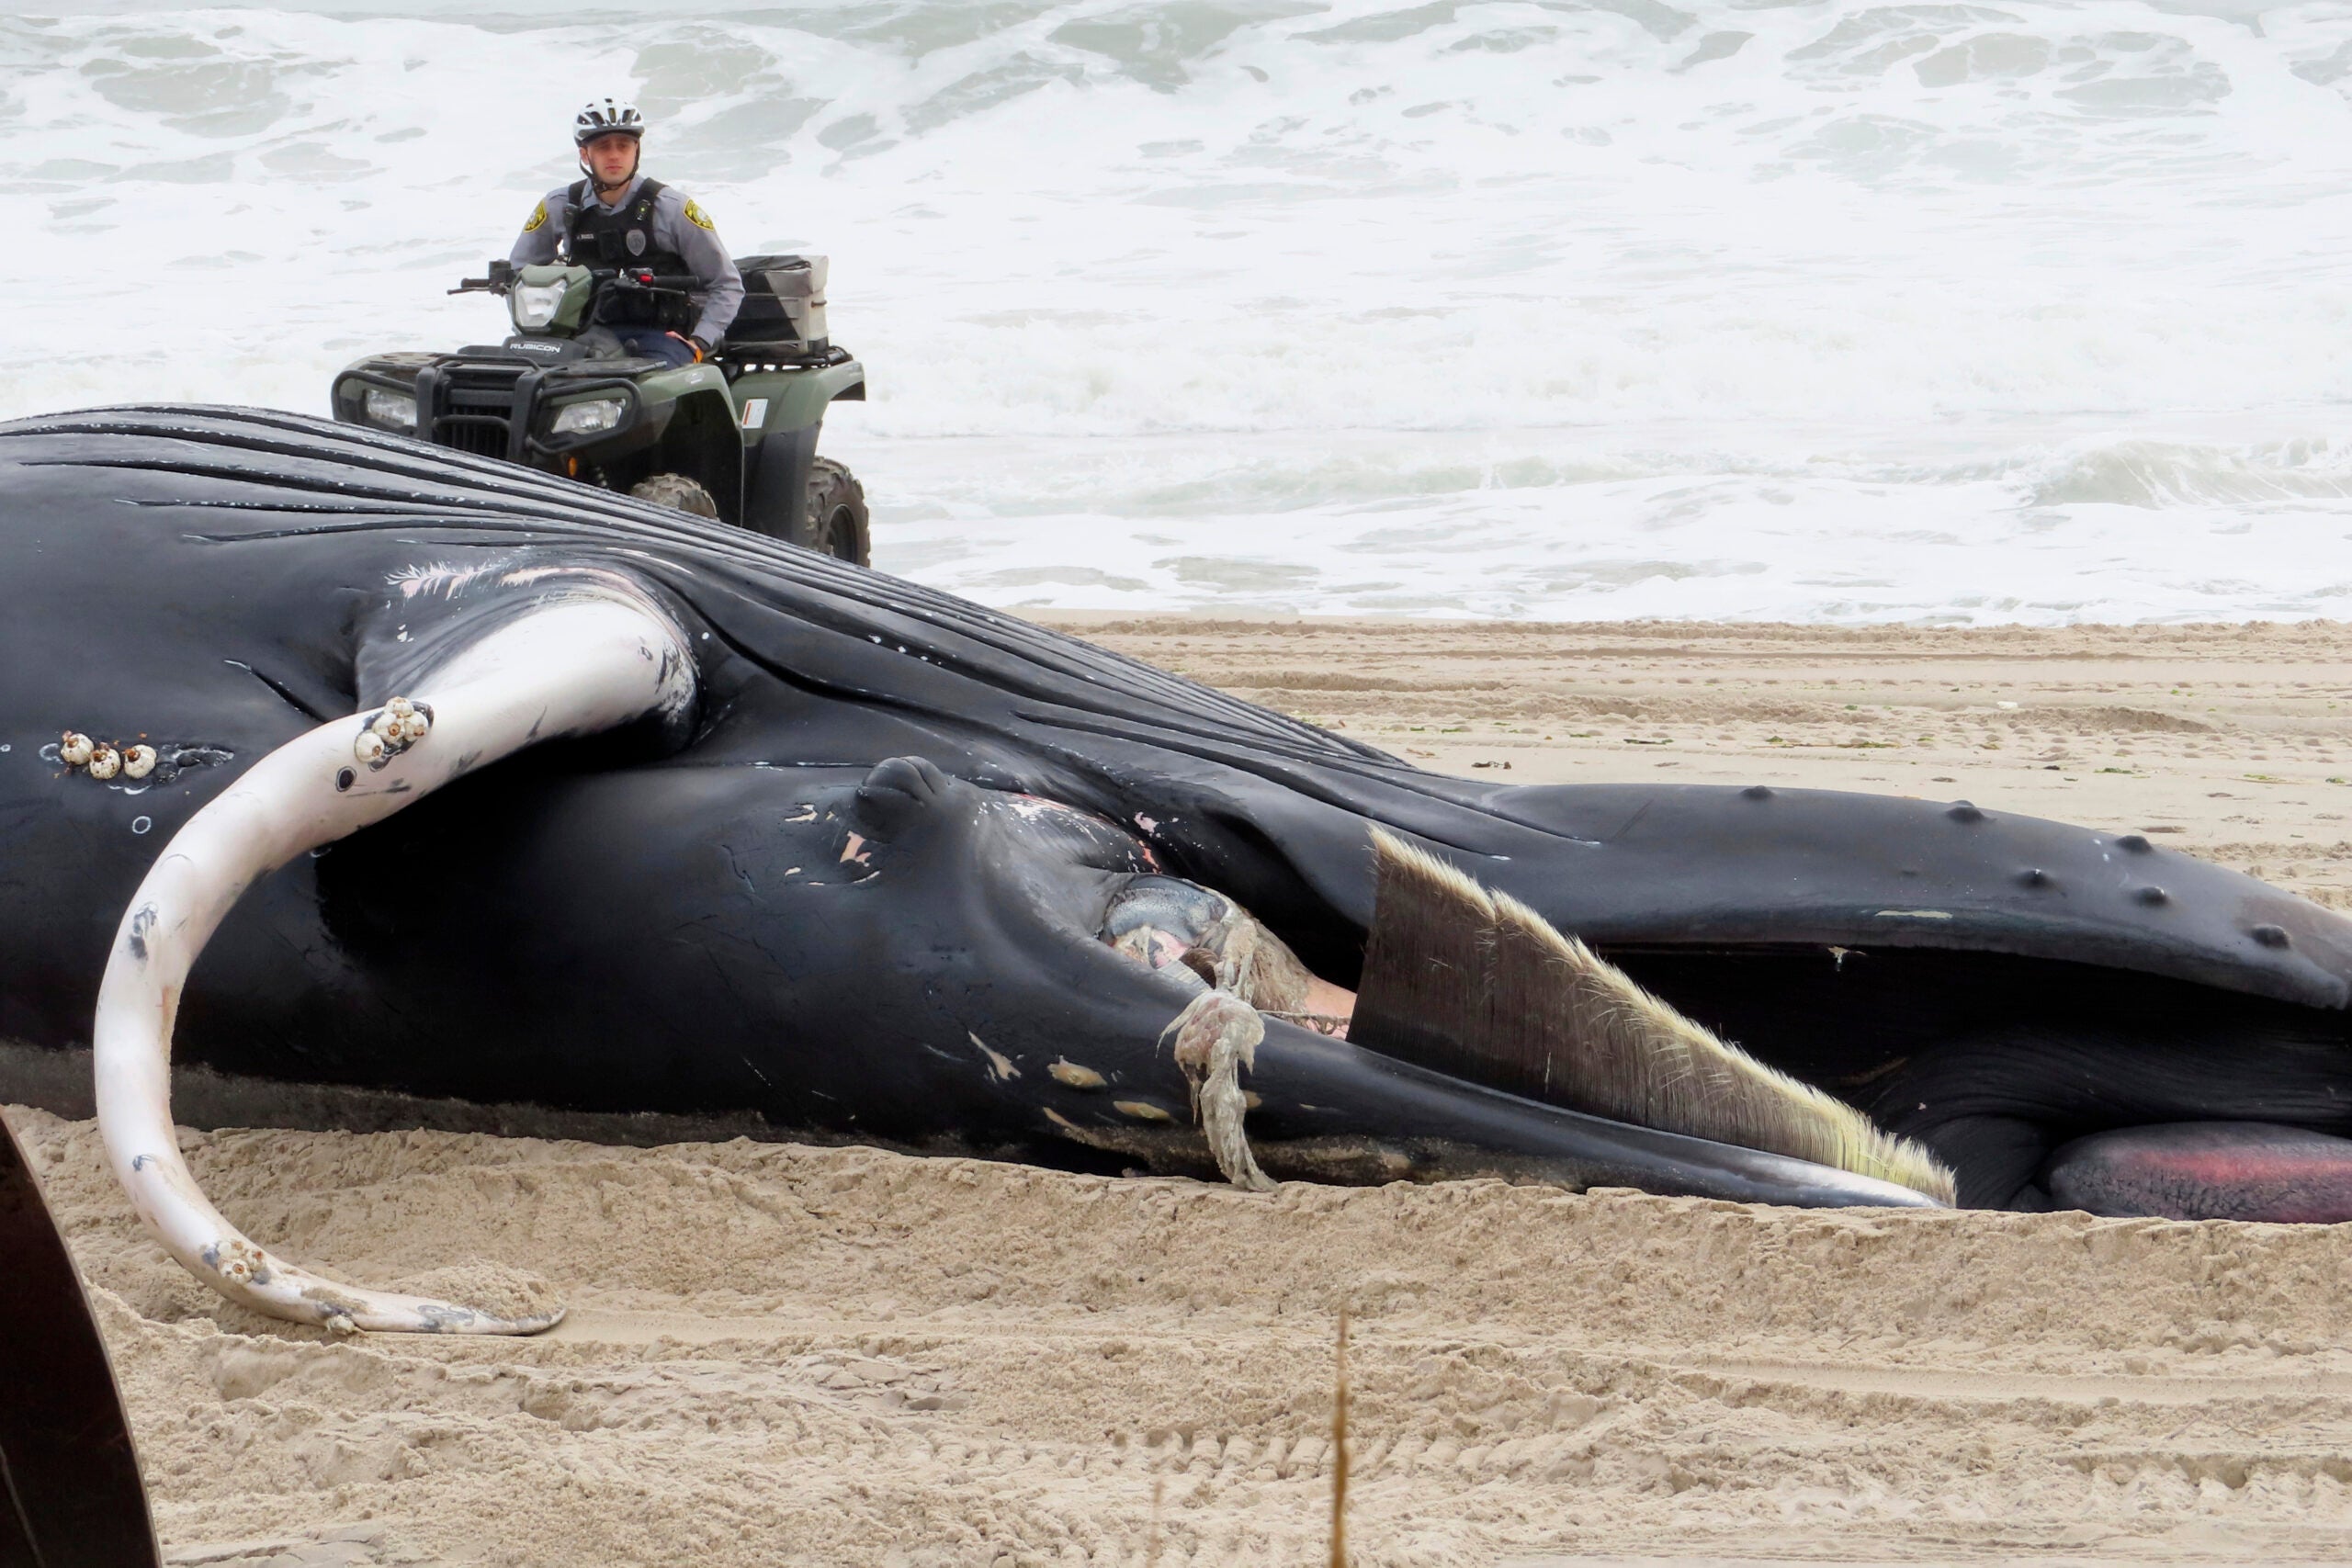 A police officer in Seaside Park N.J. rides a beach buggy near a dead whale on the beach.